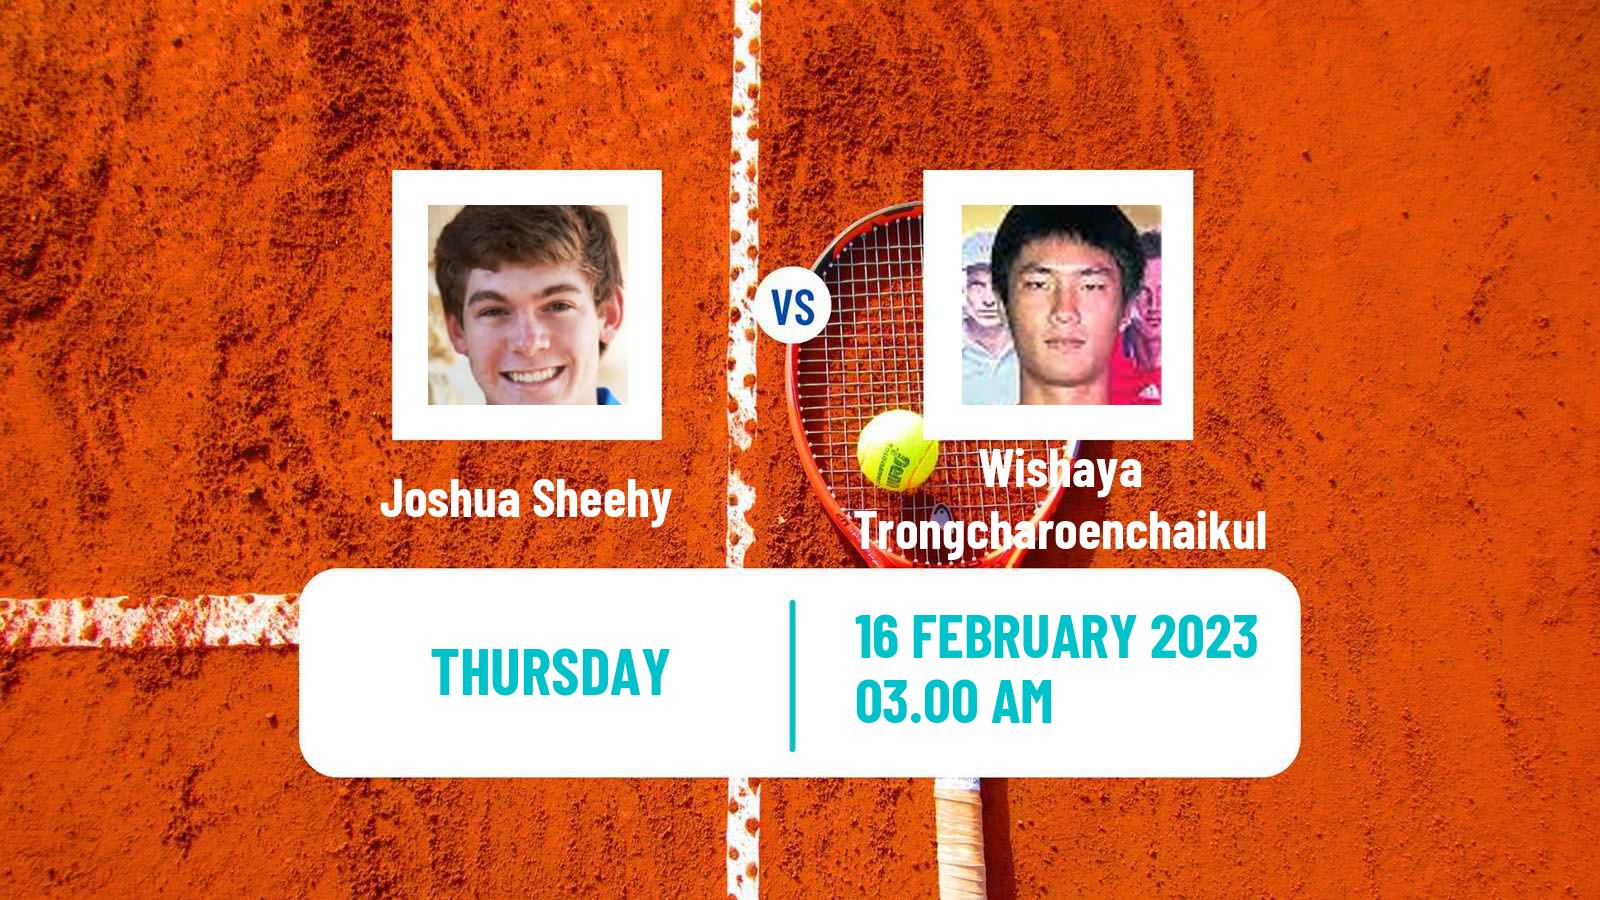 Tennis ITF Tournaments Joshua Sheehy - Wishaya Trongcharoenchaikul